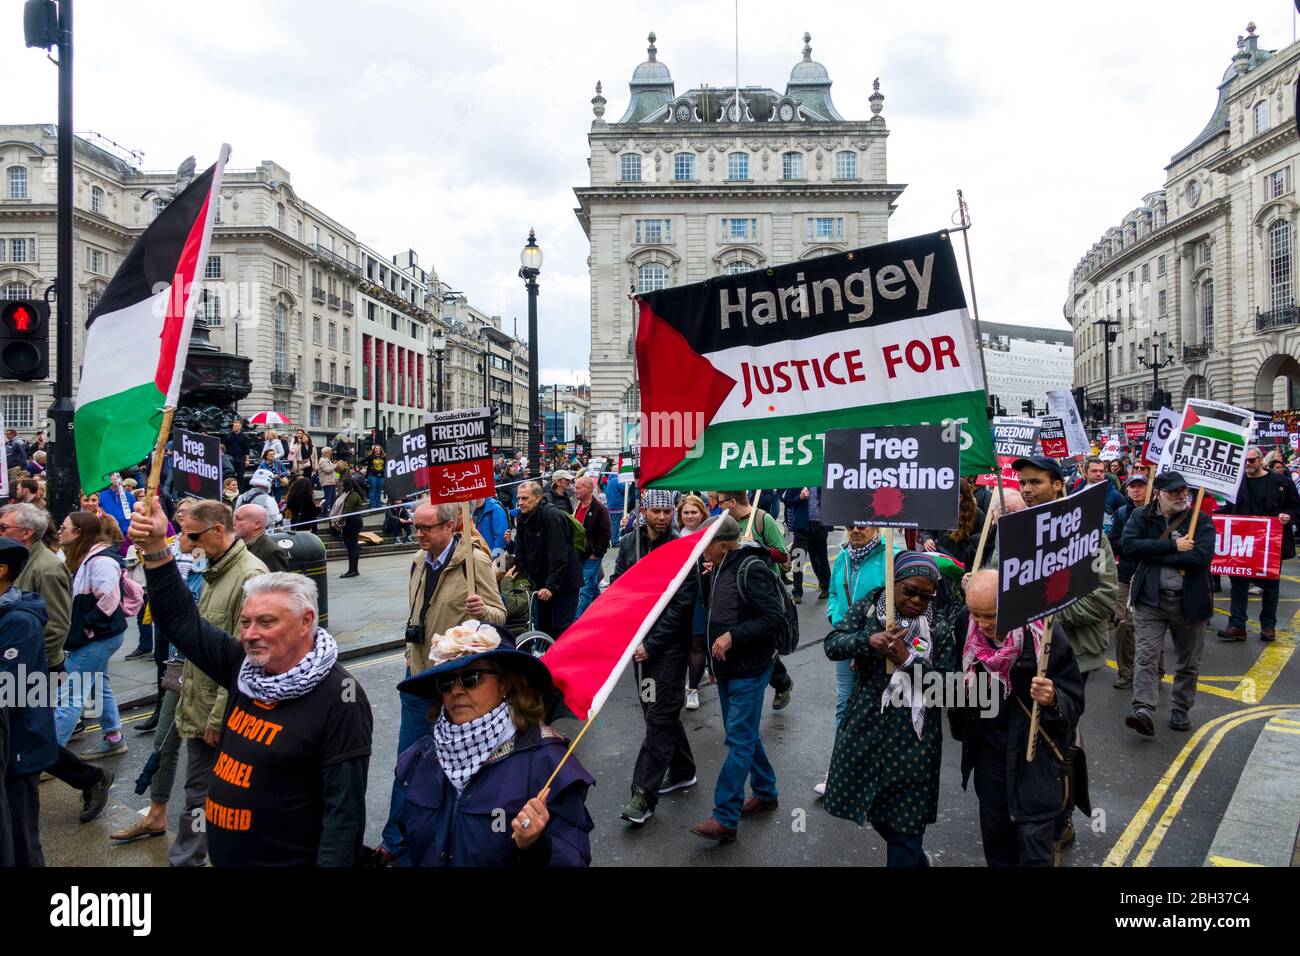 Free Palestine Protest London England United Kingdom Capital River Thames UK Europe EU Stock Photo